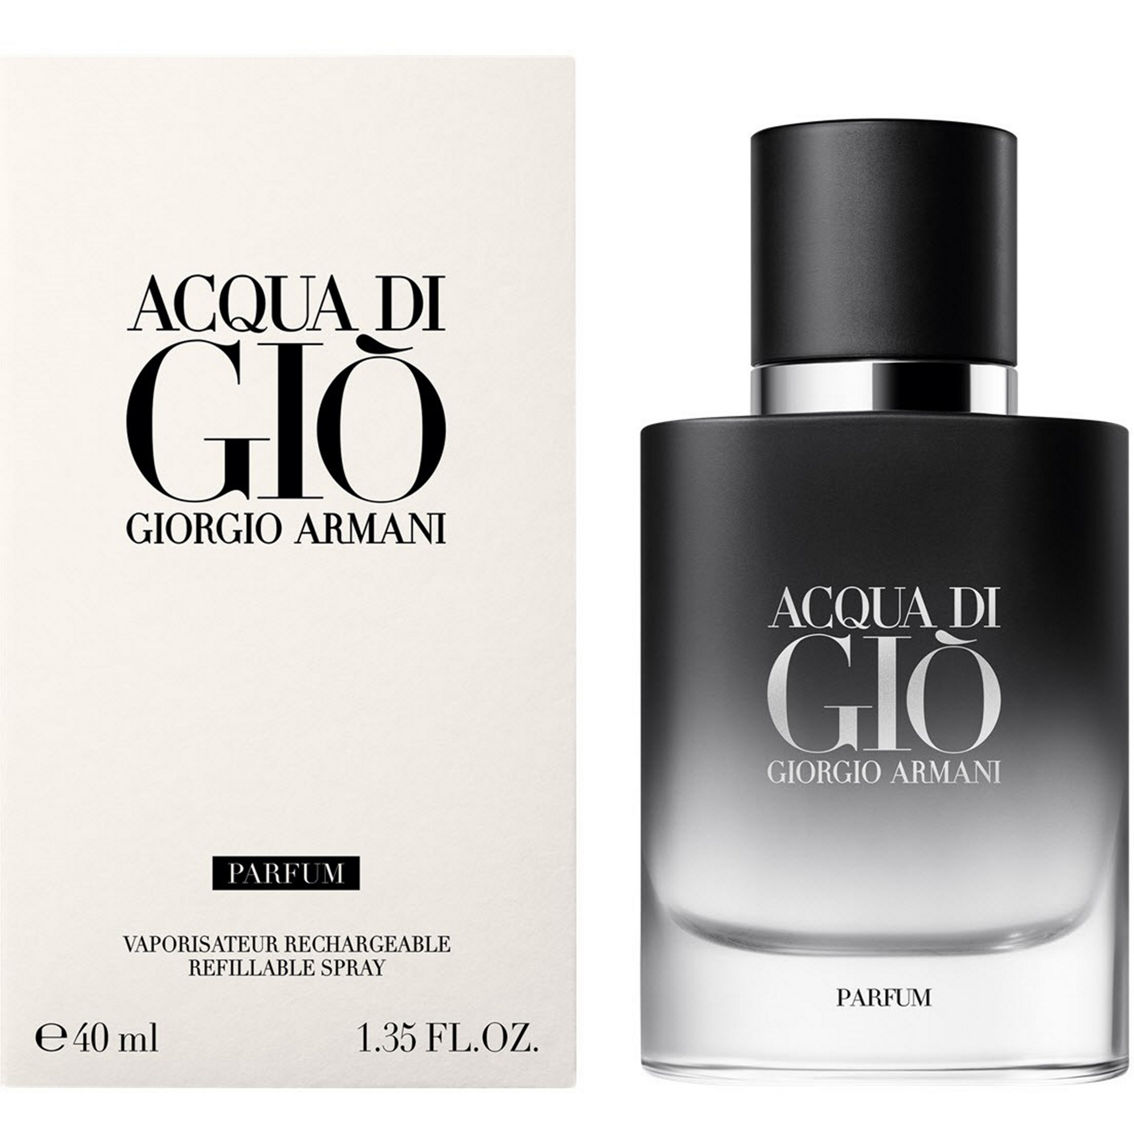 Giorgio Armani Acqua di Gio Parfum Spray - Image 2 of 7